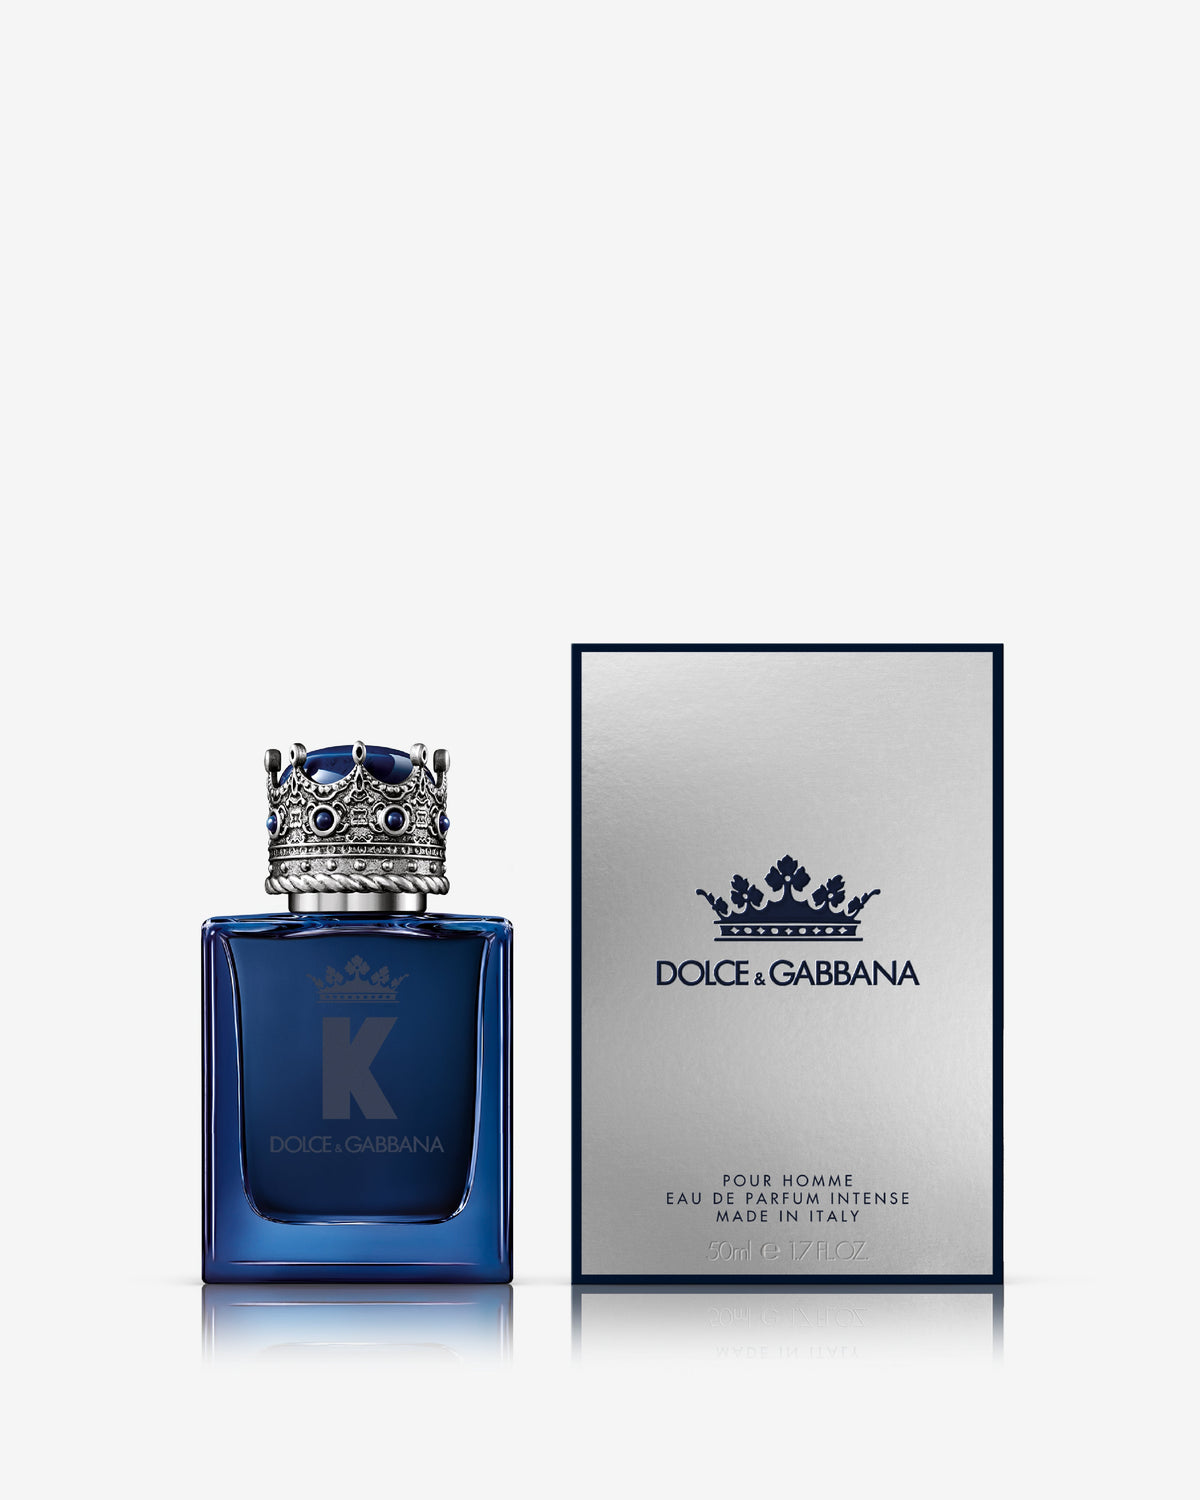 K By Dolce &amp; Gabbana Eau De Parfum Intense